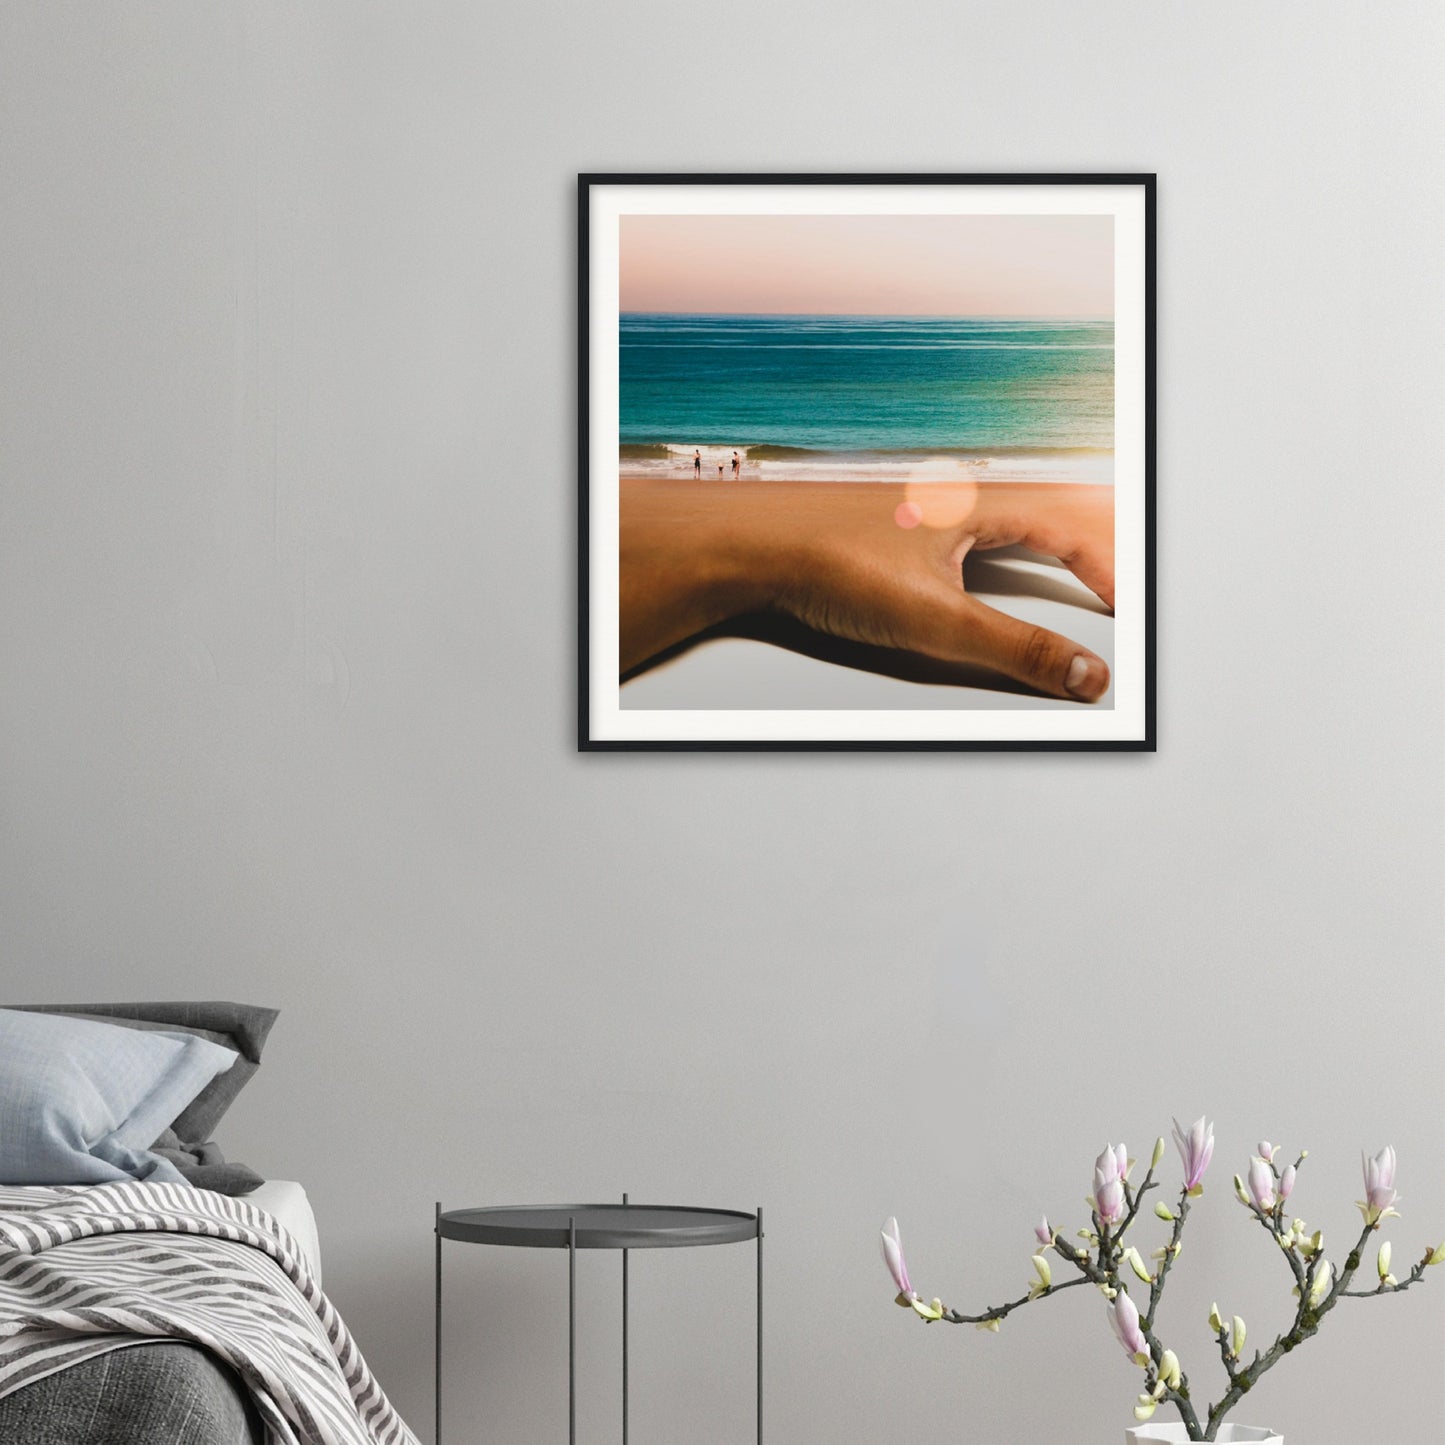 Handy Beach - Museum-Quality Framed Art Print